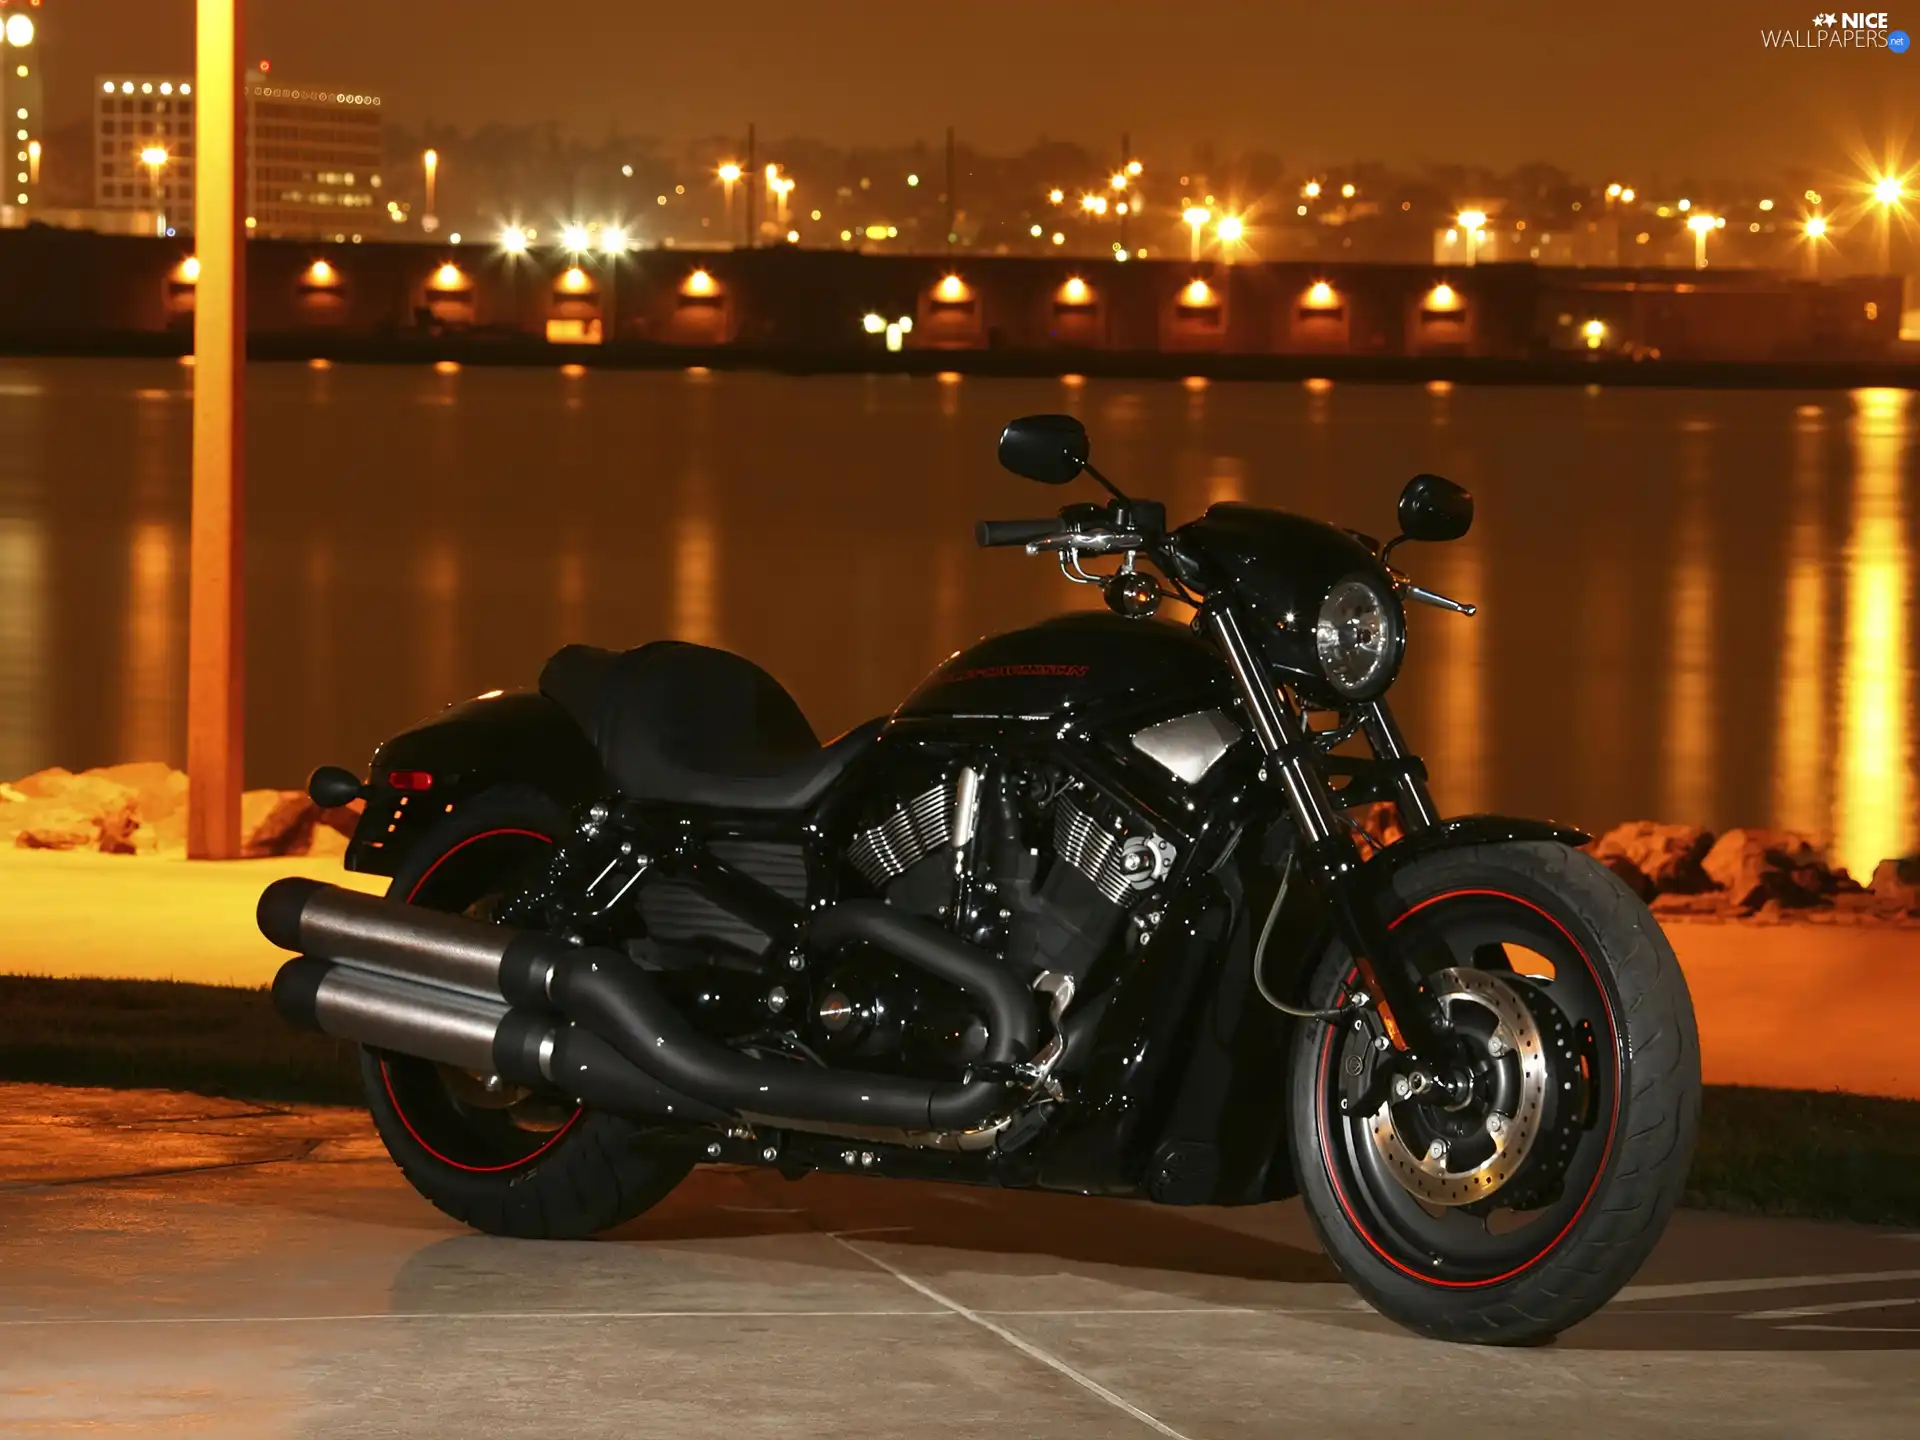 Night, Black, Harley Davidson Night Rod Special